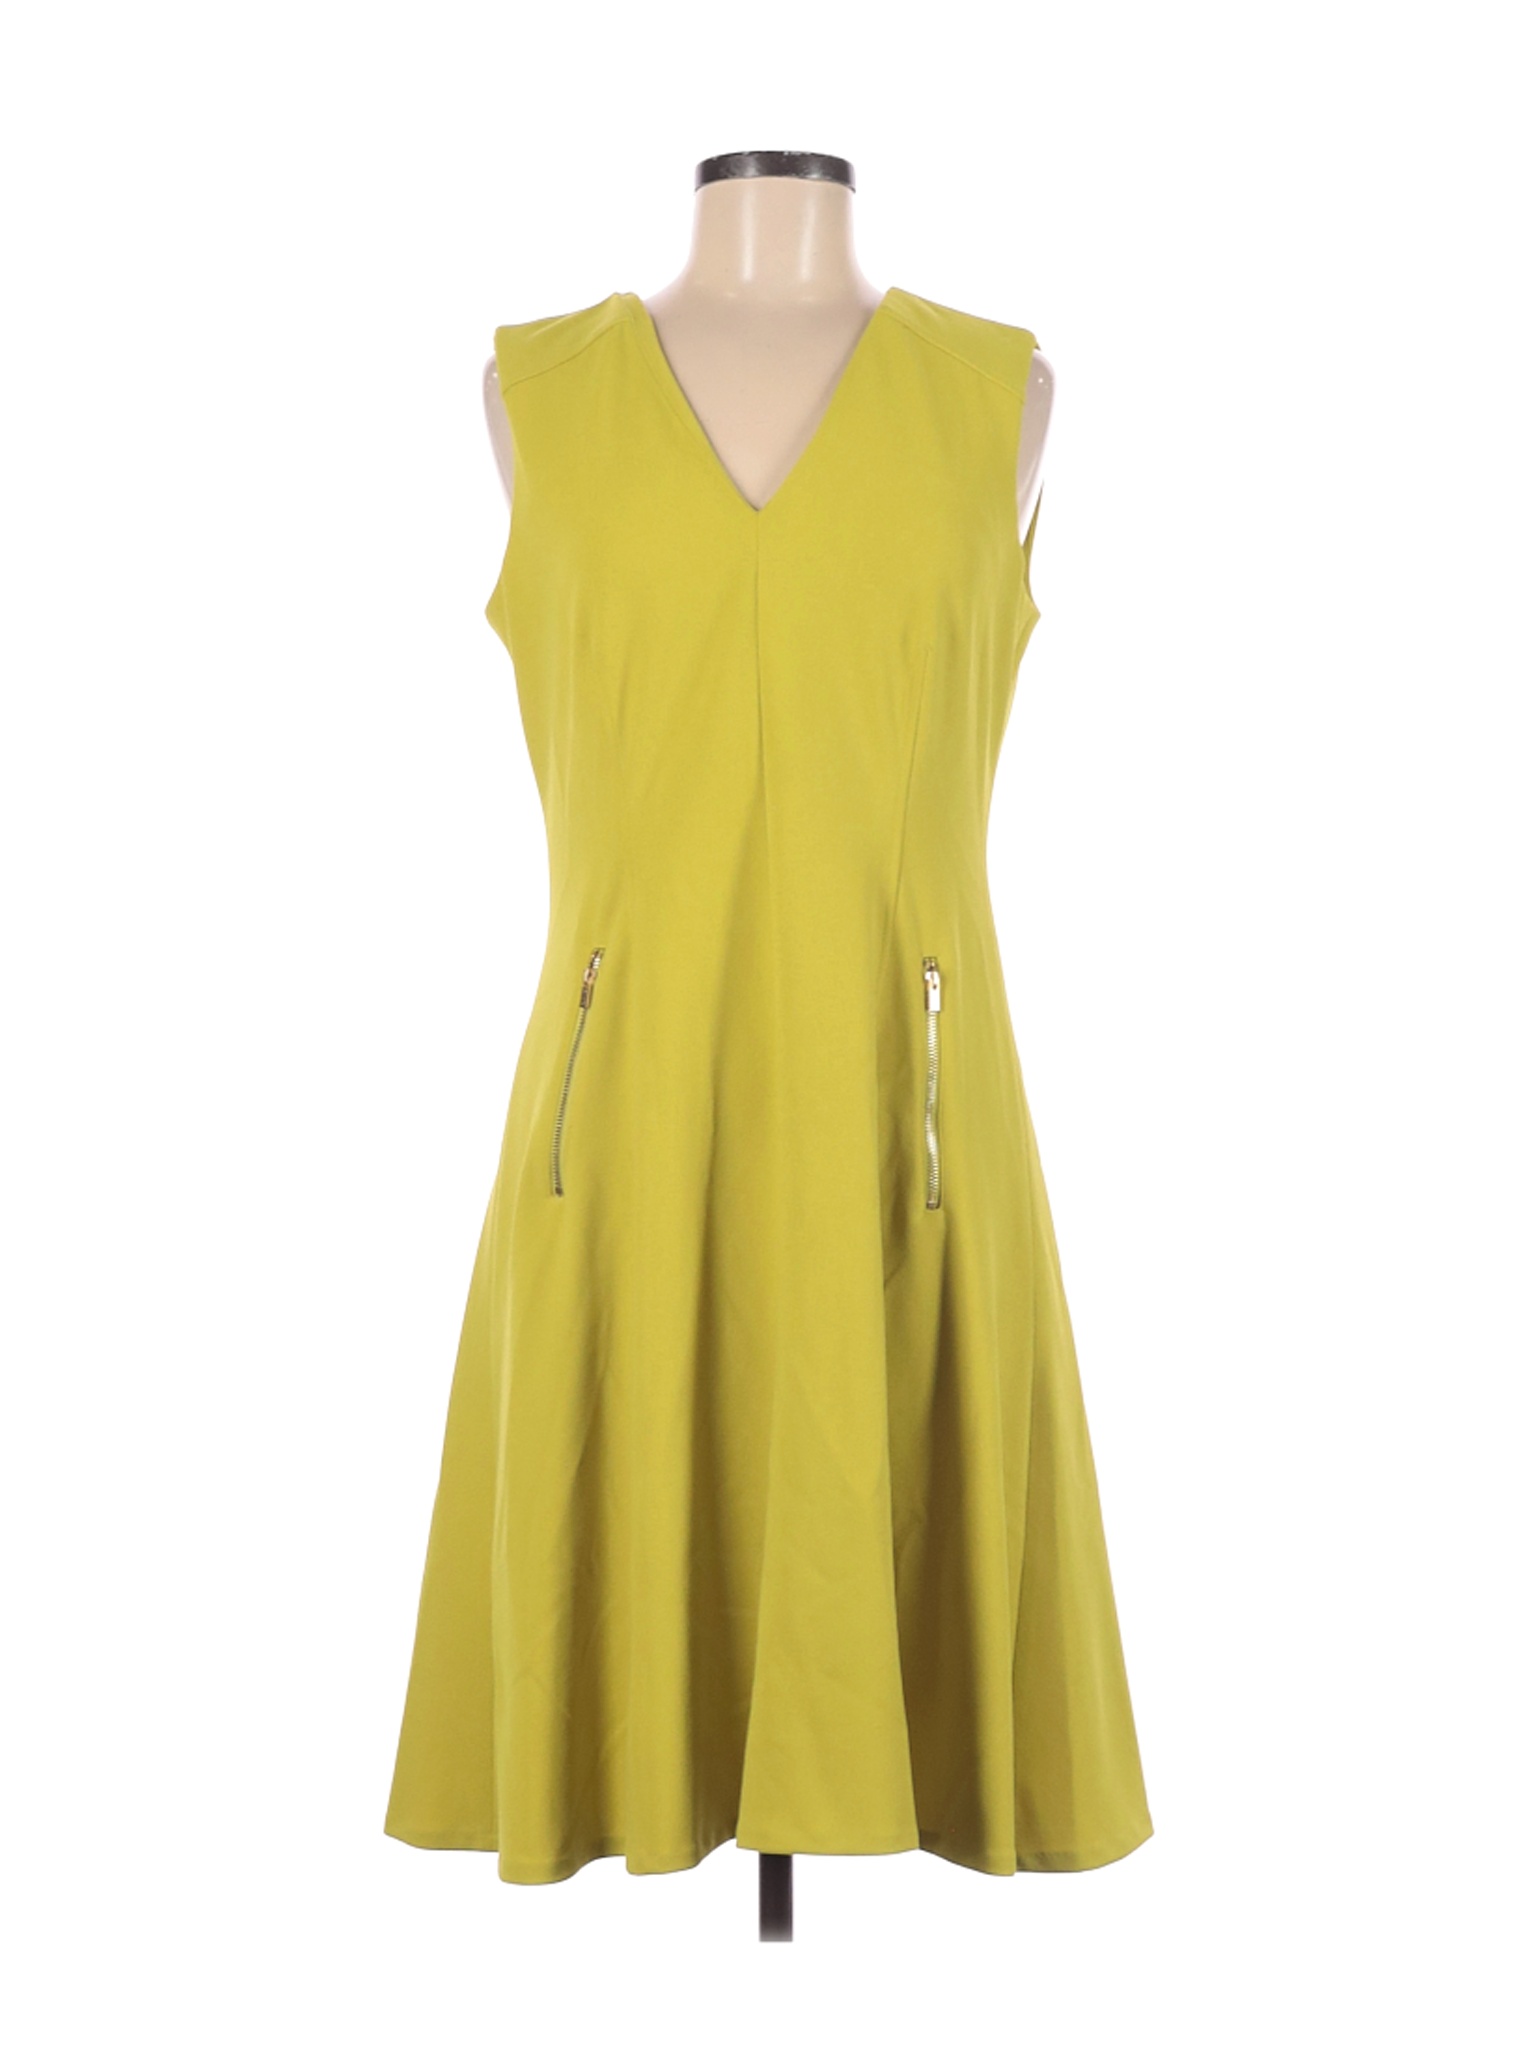 Calvin Klein Women Yellow Cocktail Dress 10 | eBay